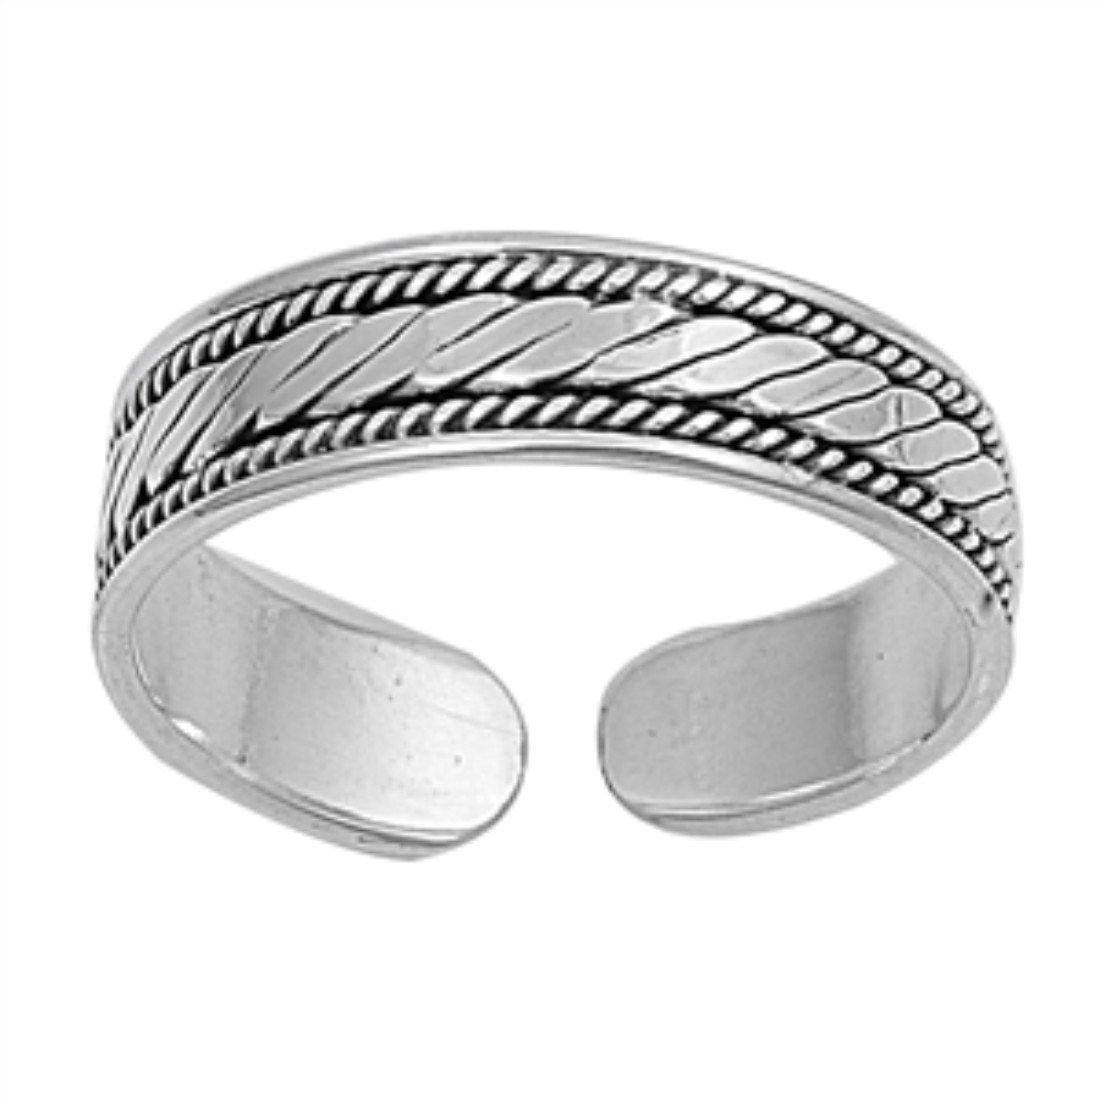 Adjustable Bali Design Silver Toe Ring 925 Sterling Silver (4mm)